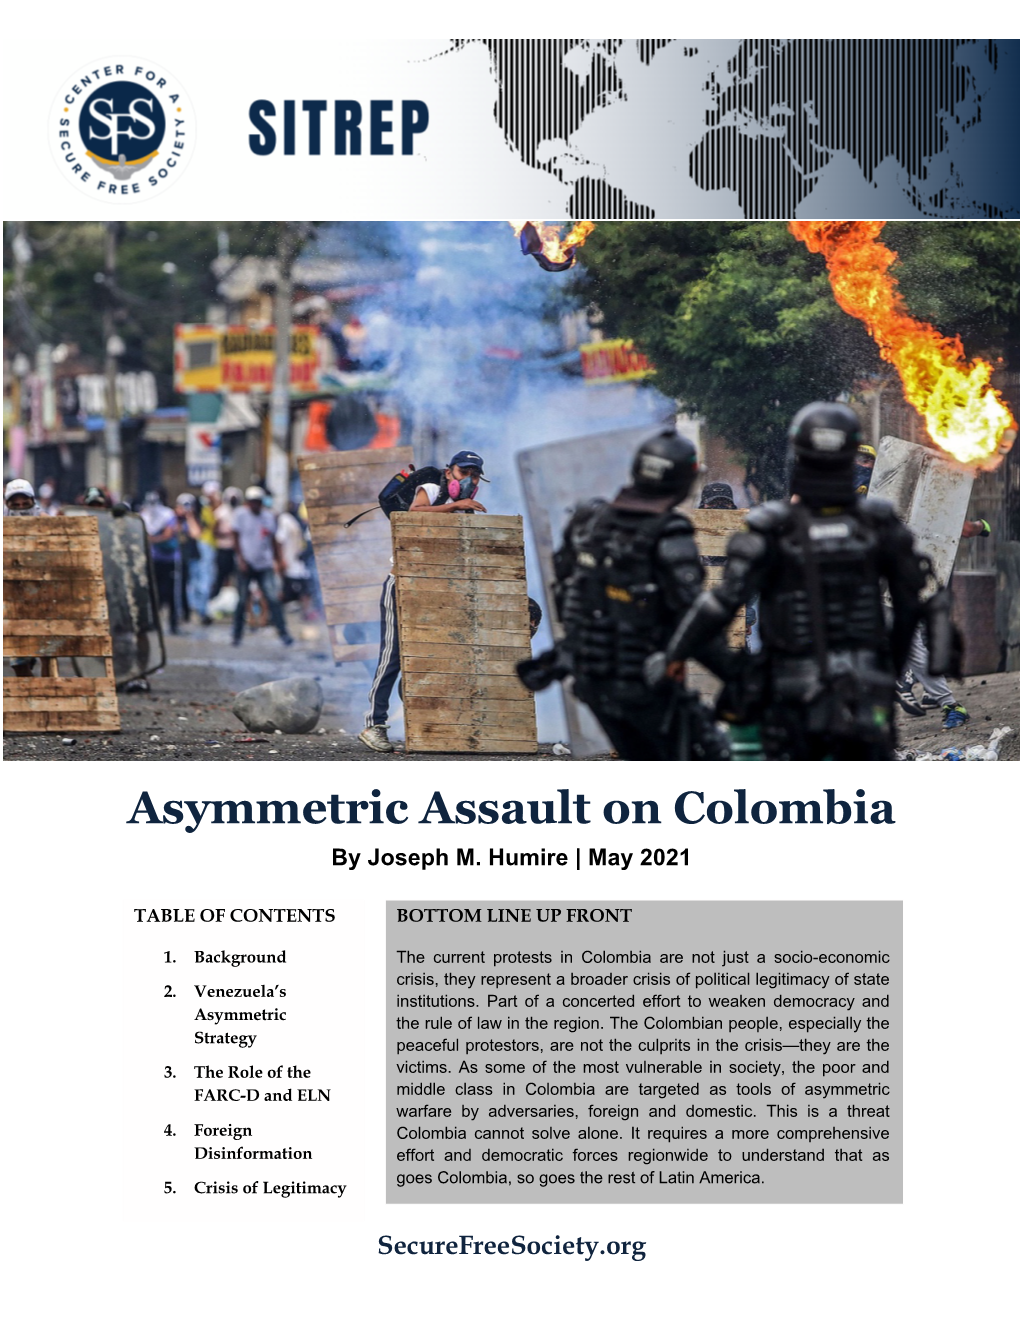 Asymmetric Assault on Colombia by Joseph M